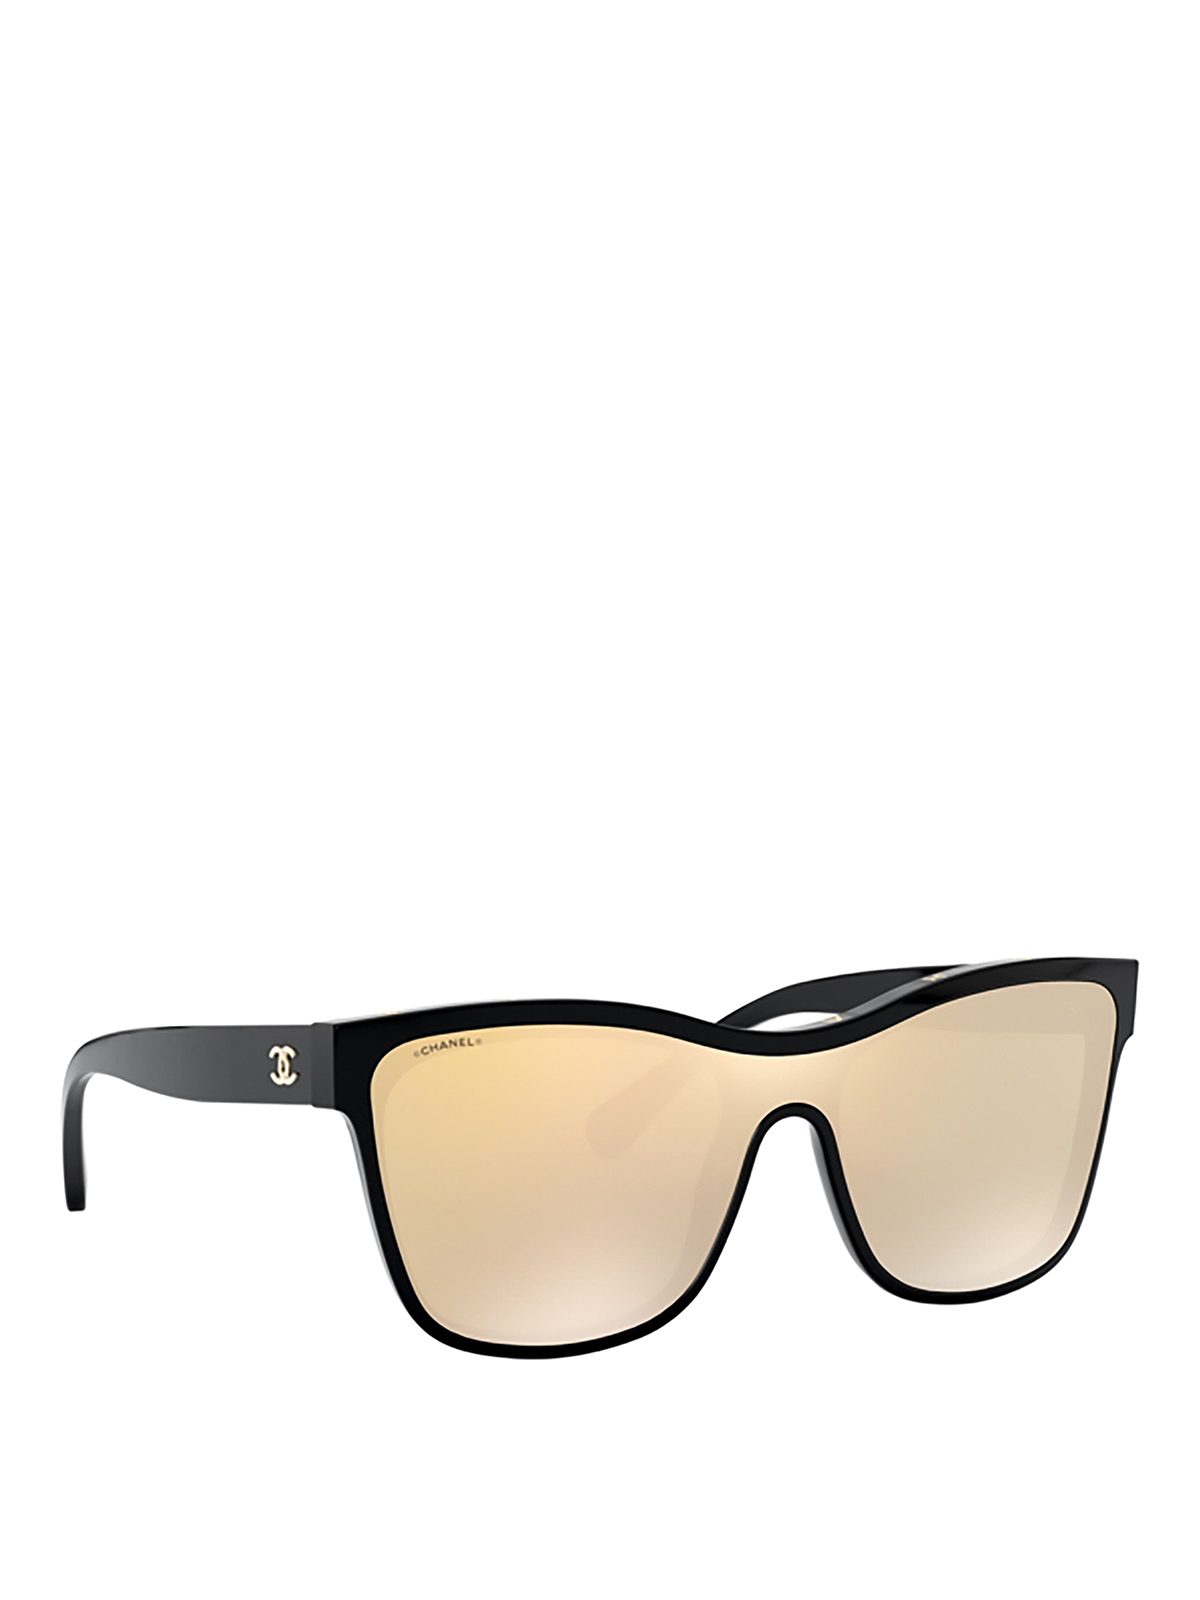 Chanel - Square Sunglasses - Tortoise Brown Mirror - Chanel Eyewear -  Avvenice